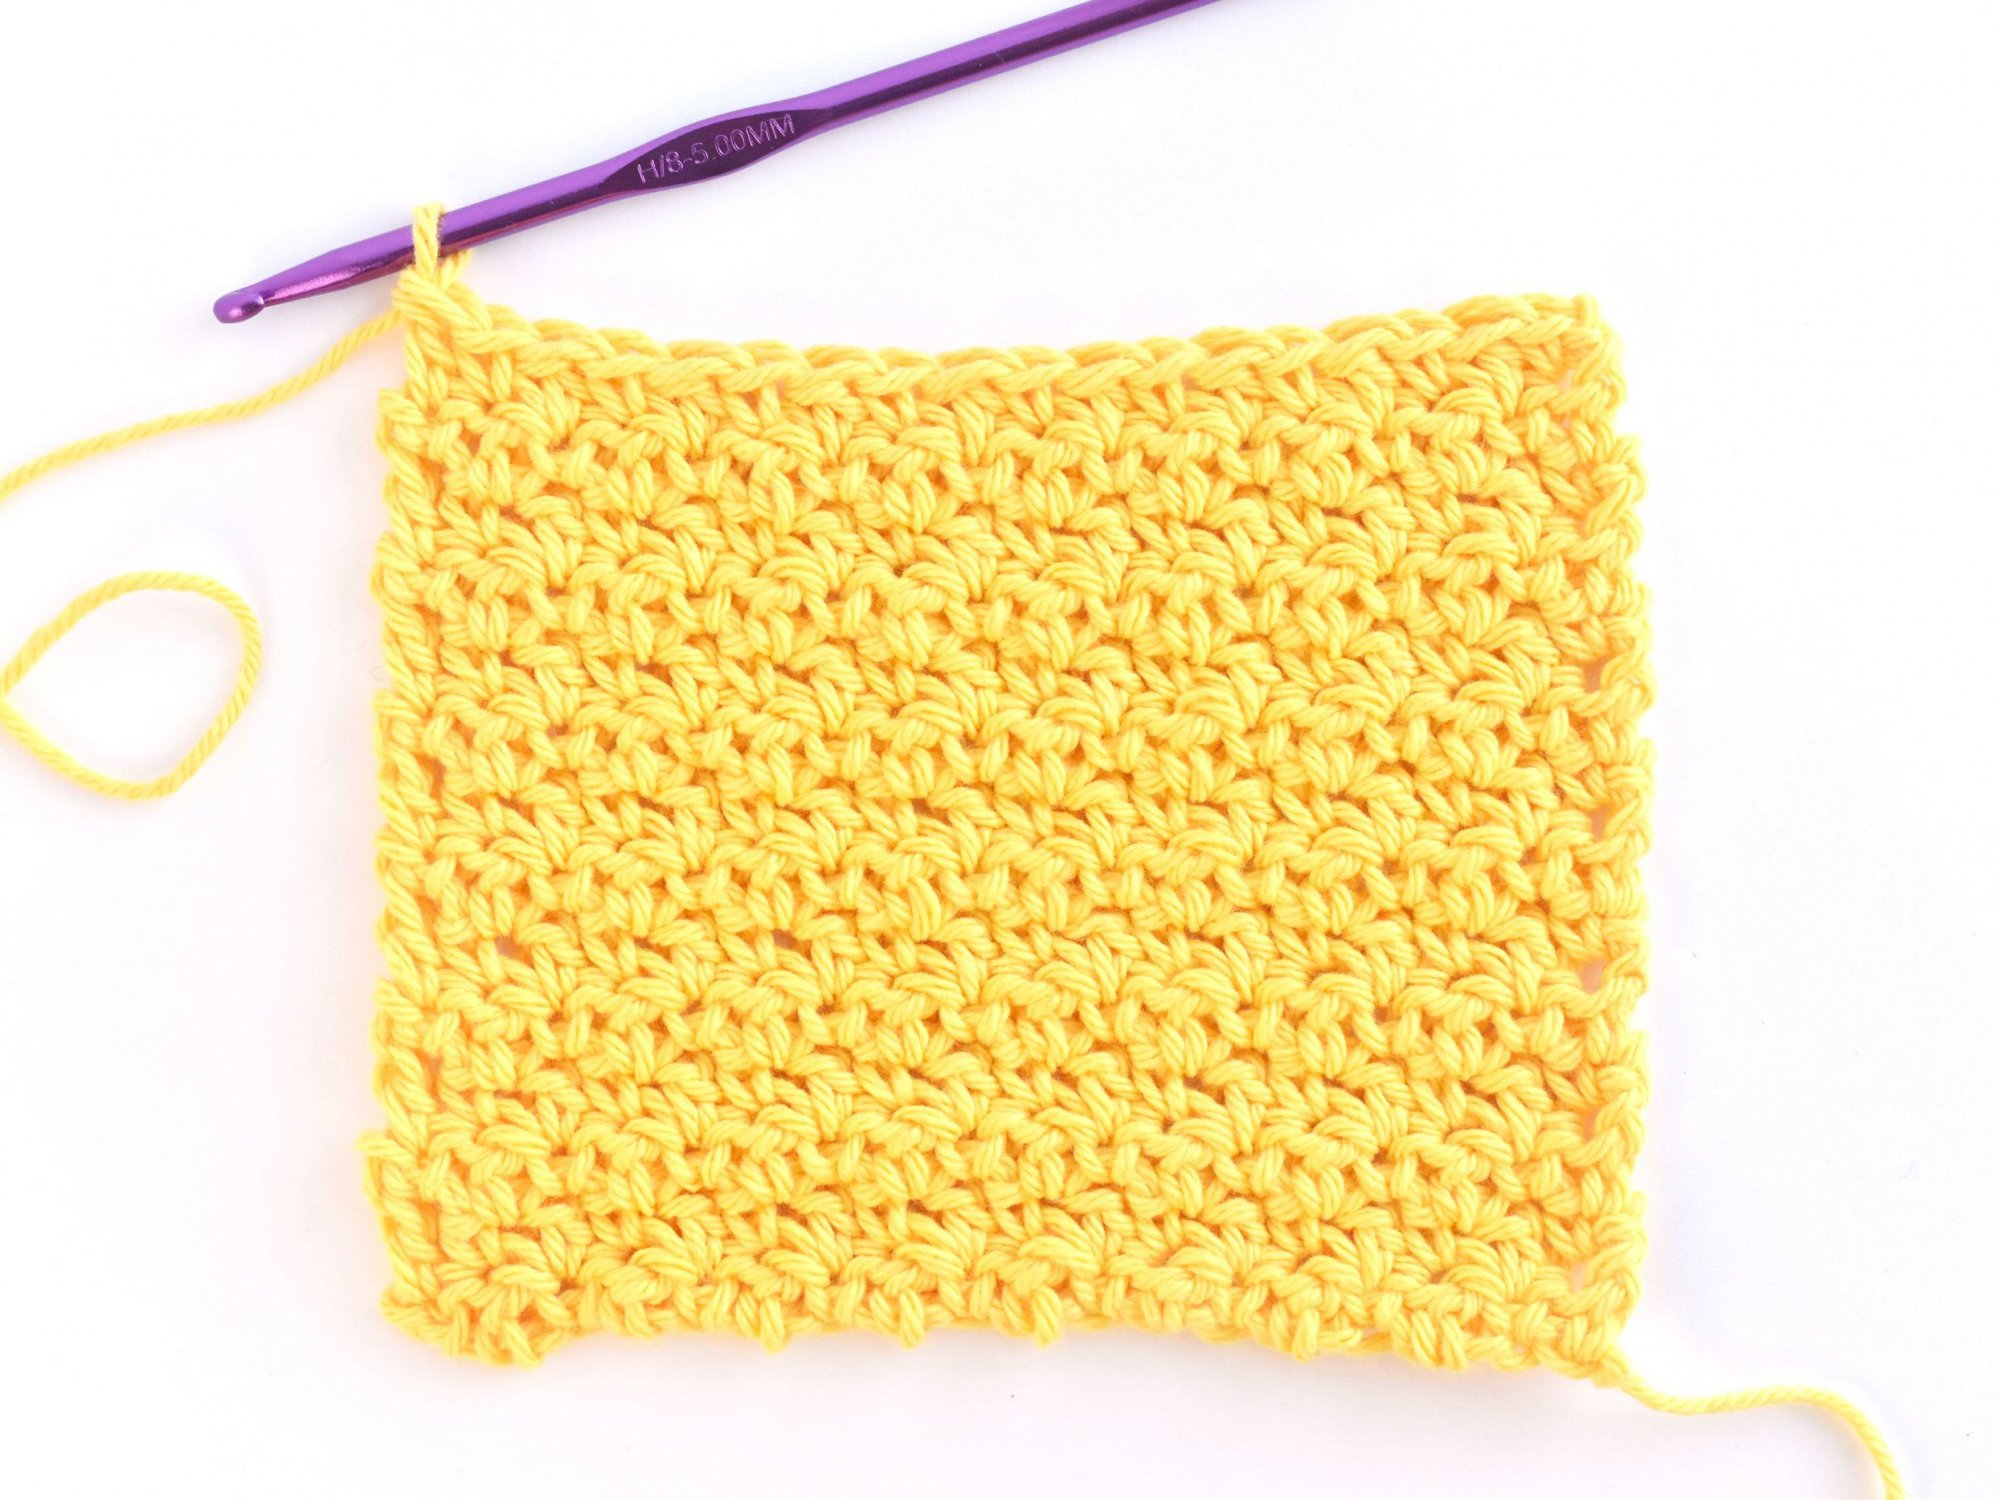 Lemon peel crochet stitch